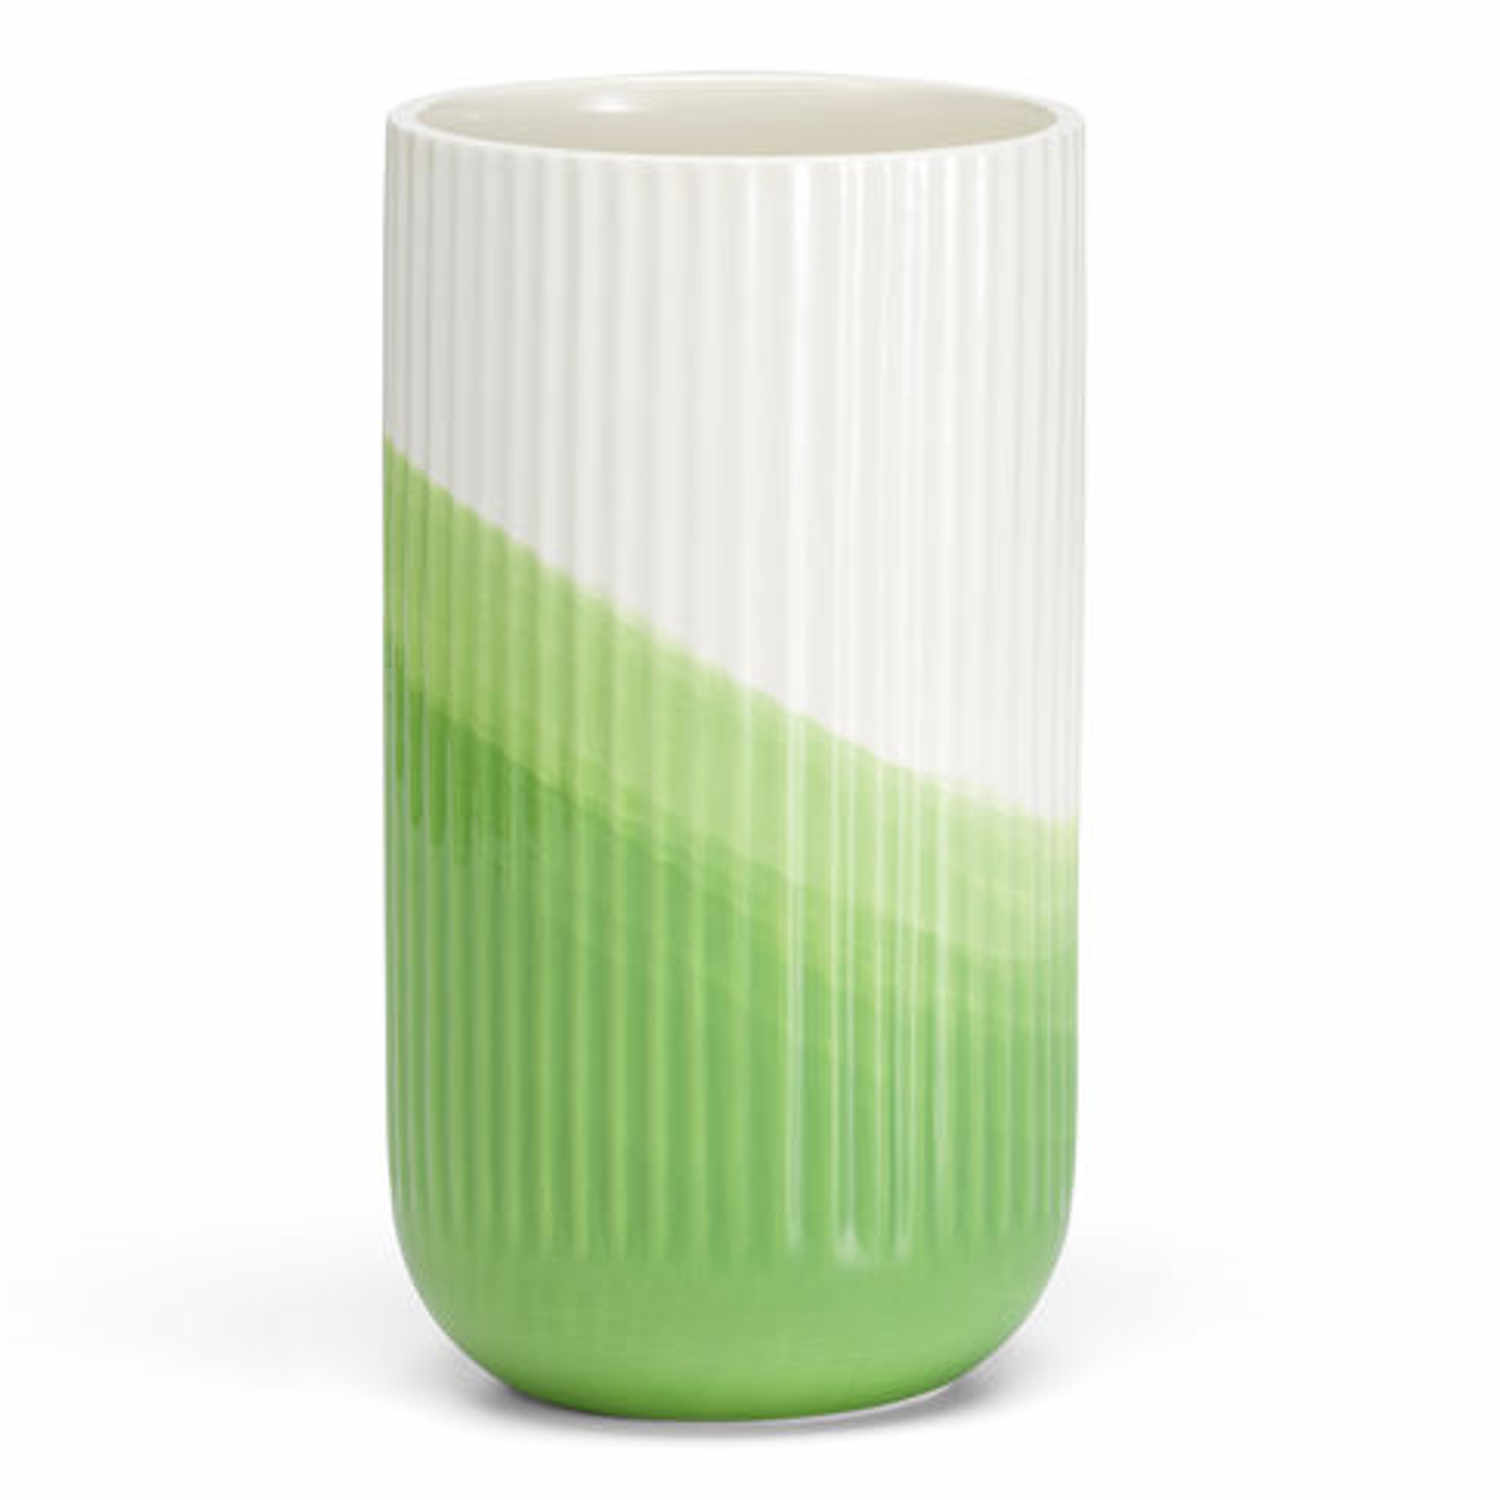 Herringbone Vessels gerillt Vase, Farbe grün von Vitra